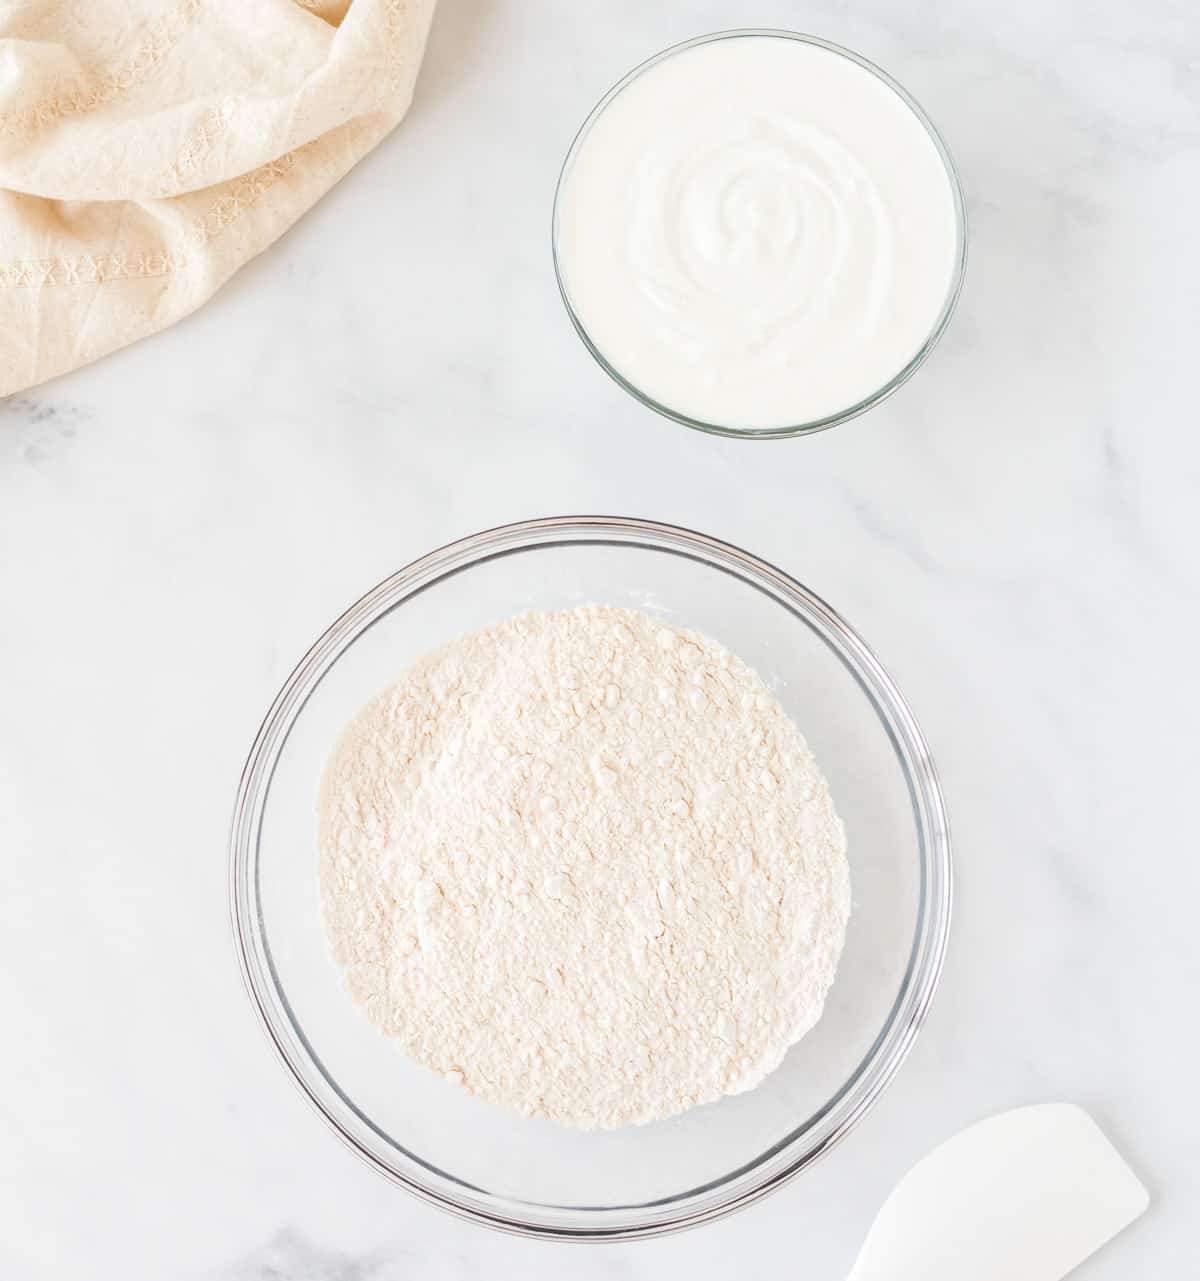 self rising flour and greek yogurt in bowls